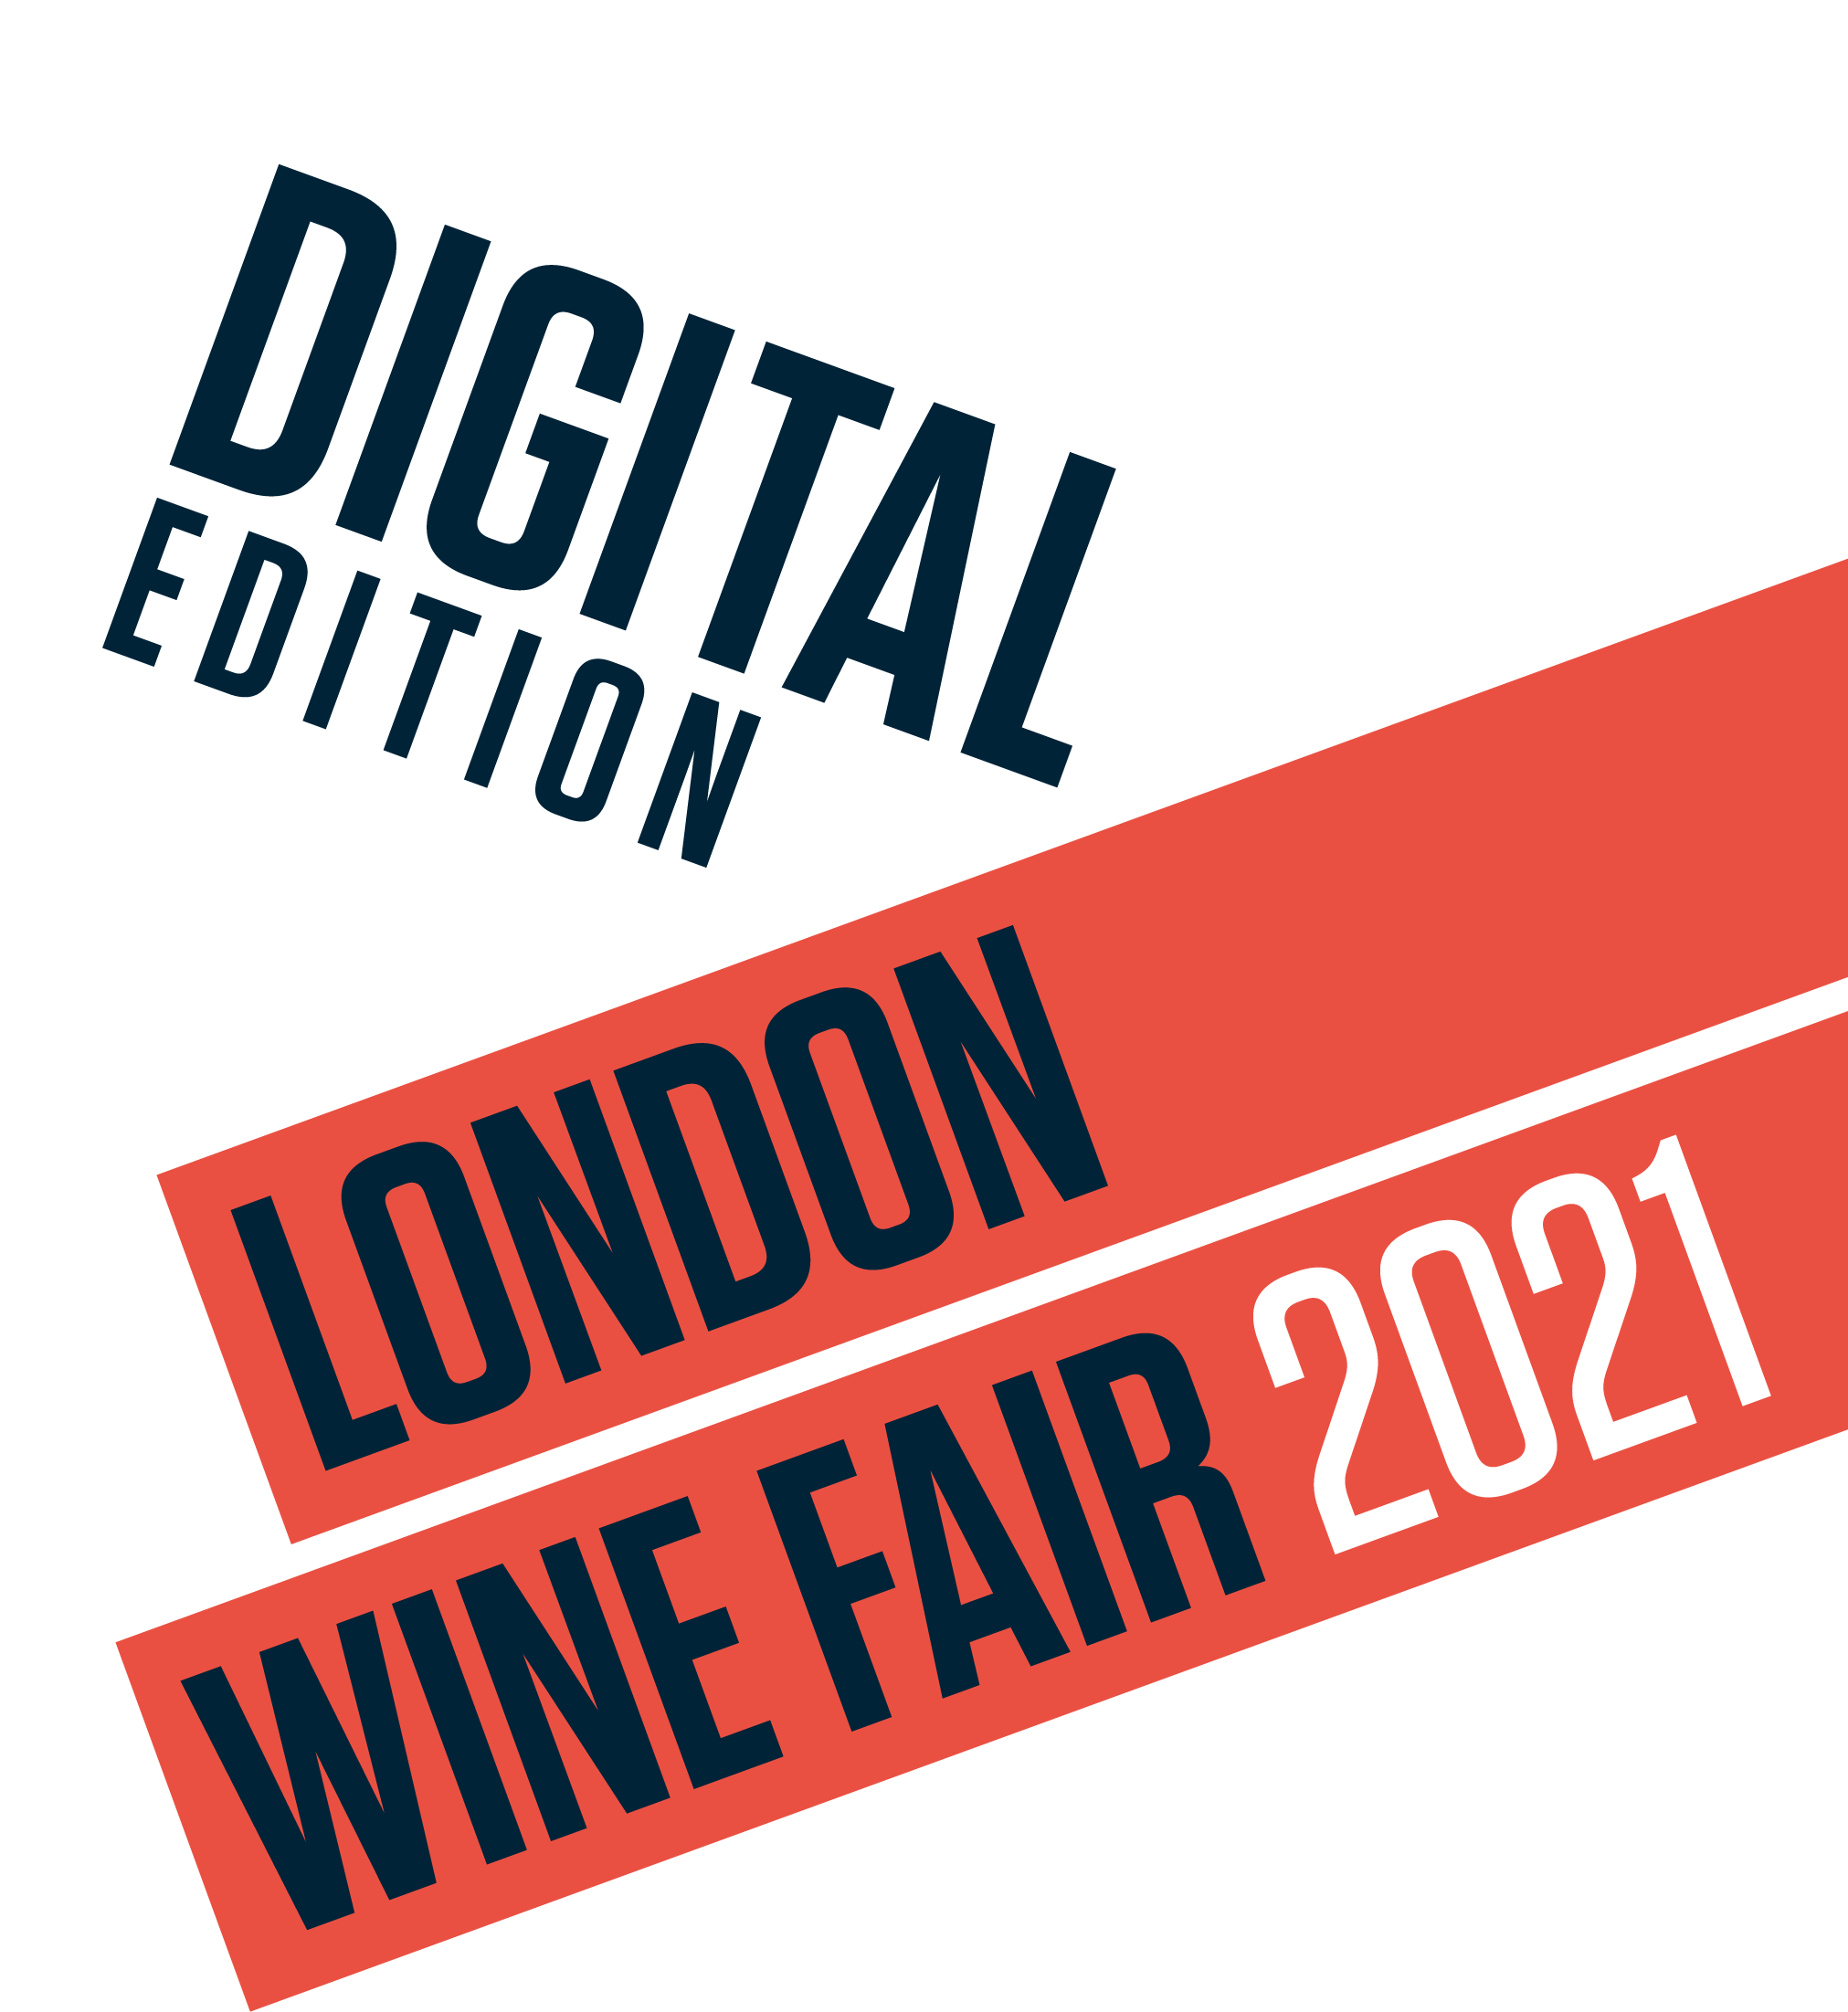 London Wine Fair 2021